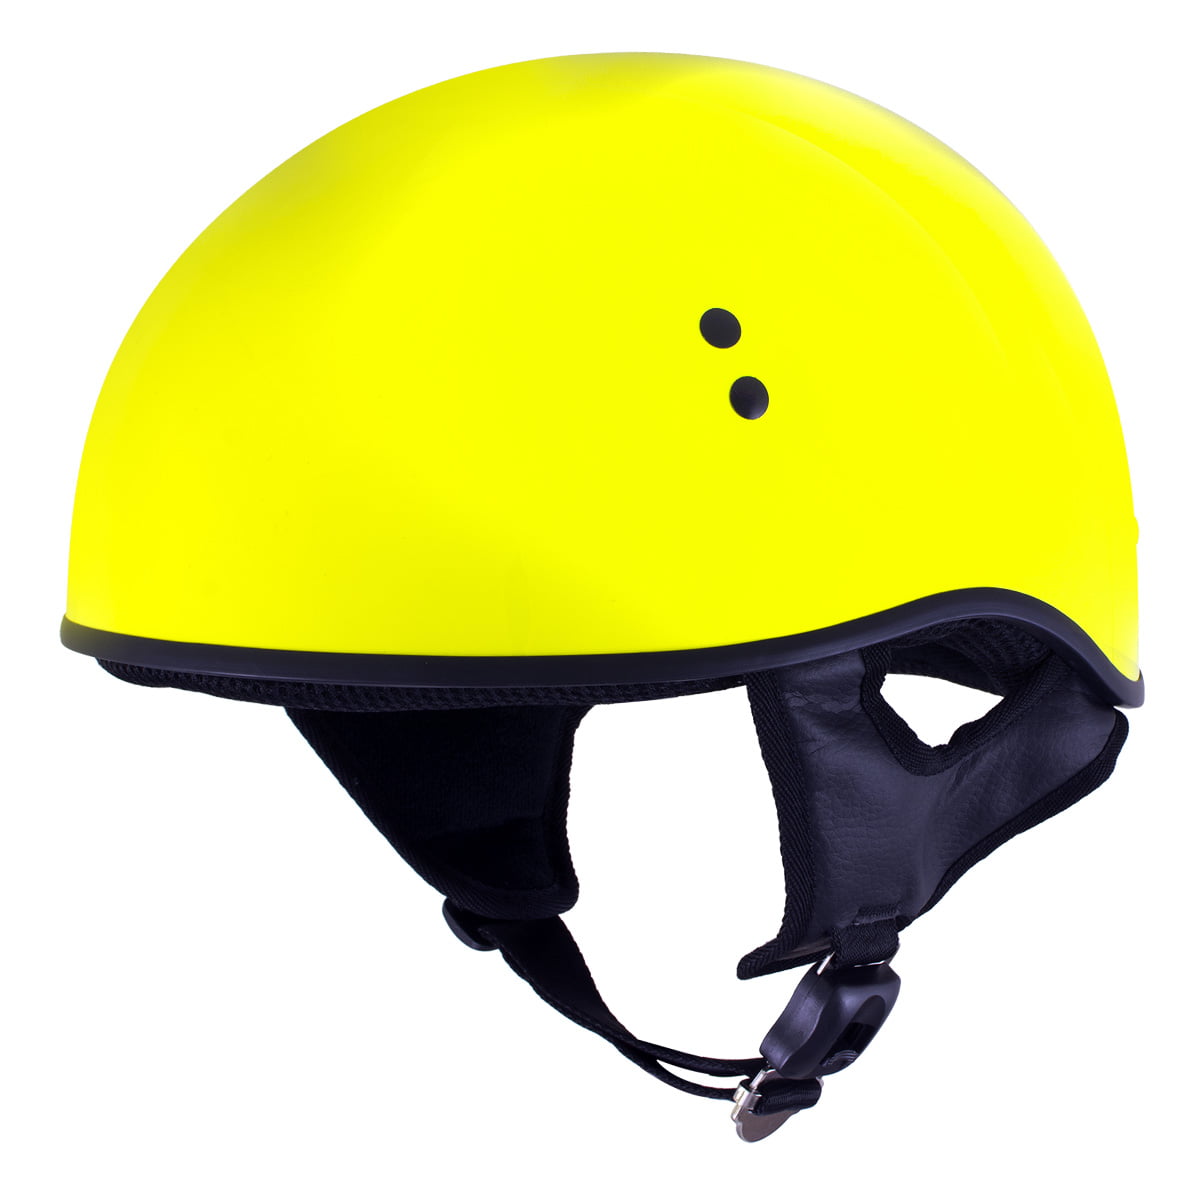 Outlaw T68 The O.G Hi-Vis Yellow Advanced Motorcycle Skull Cap Half DOT Helmet Small 